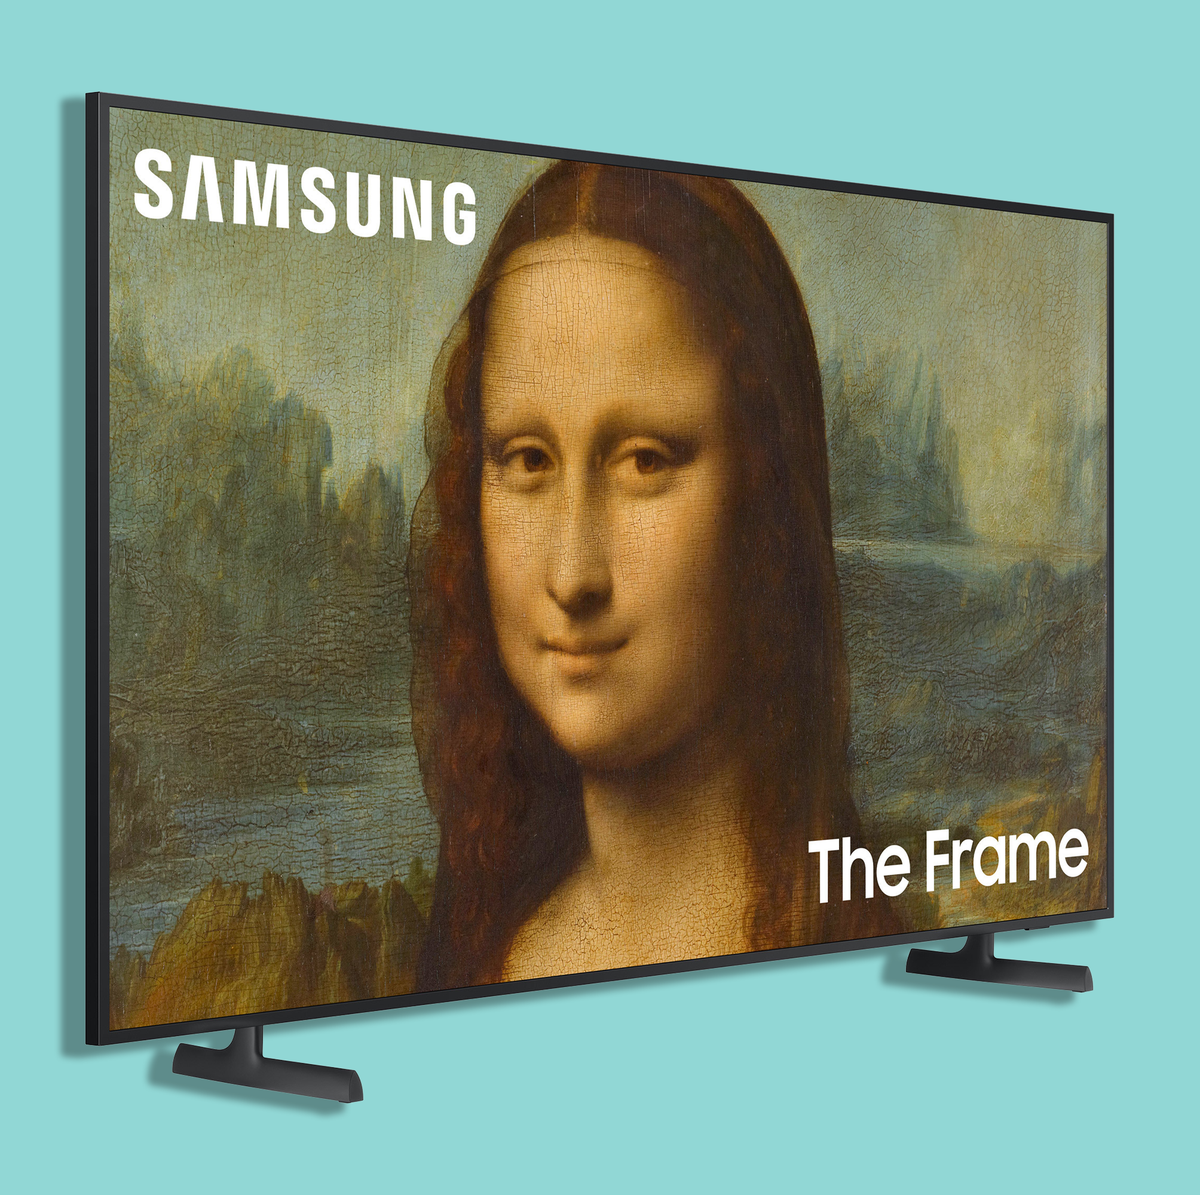 Samsung The Frame TV review